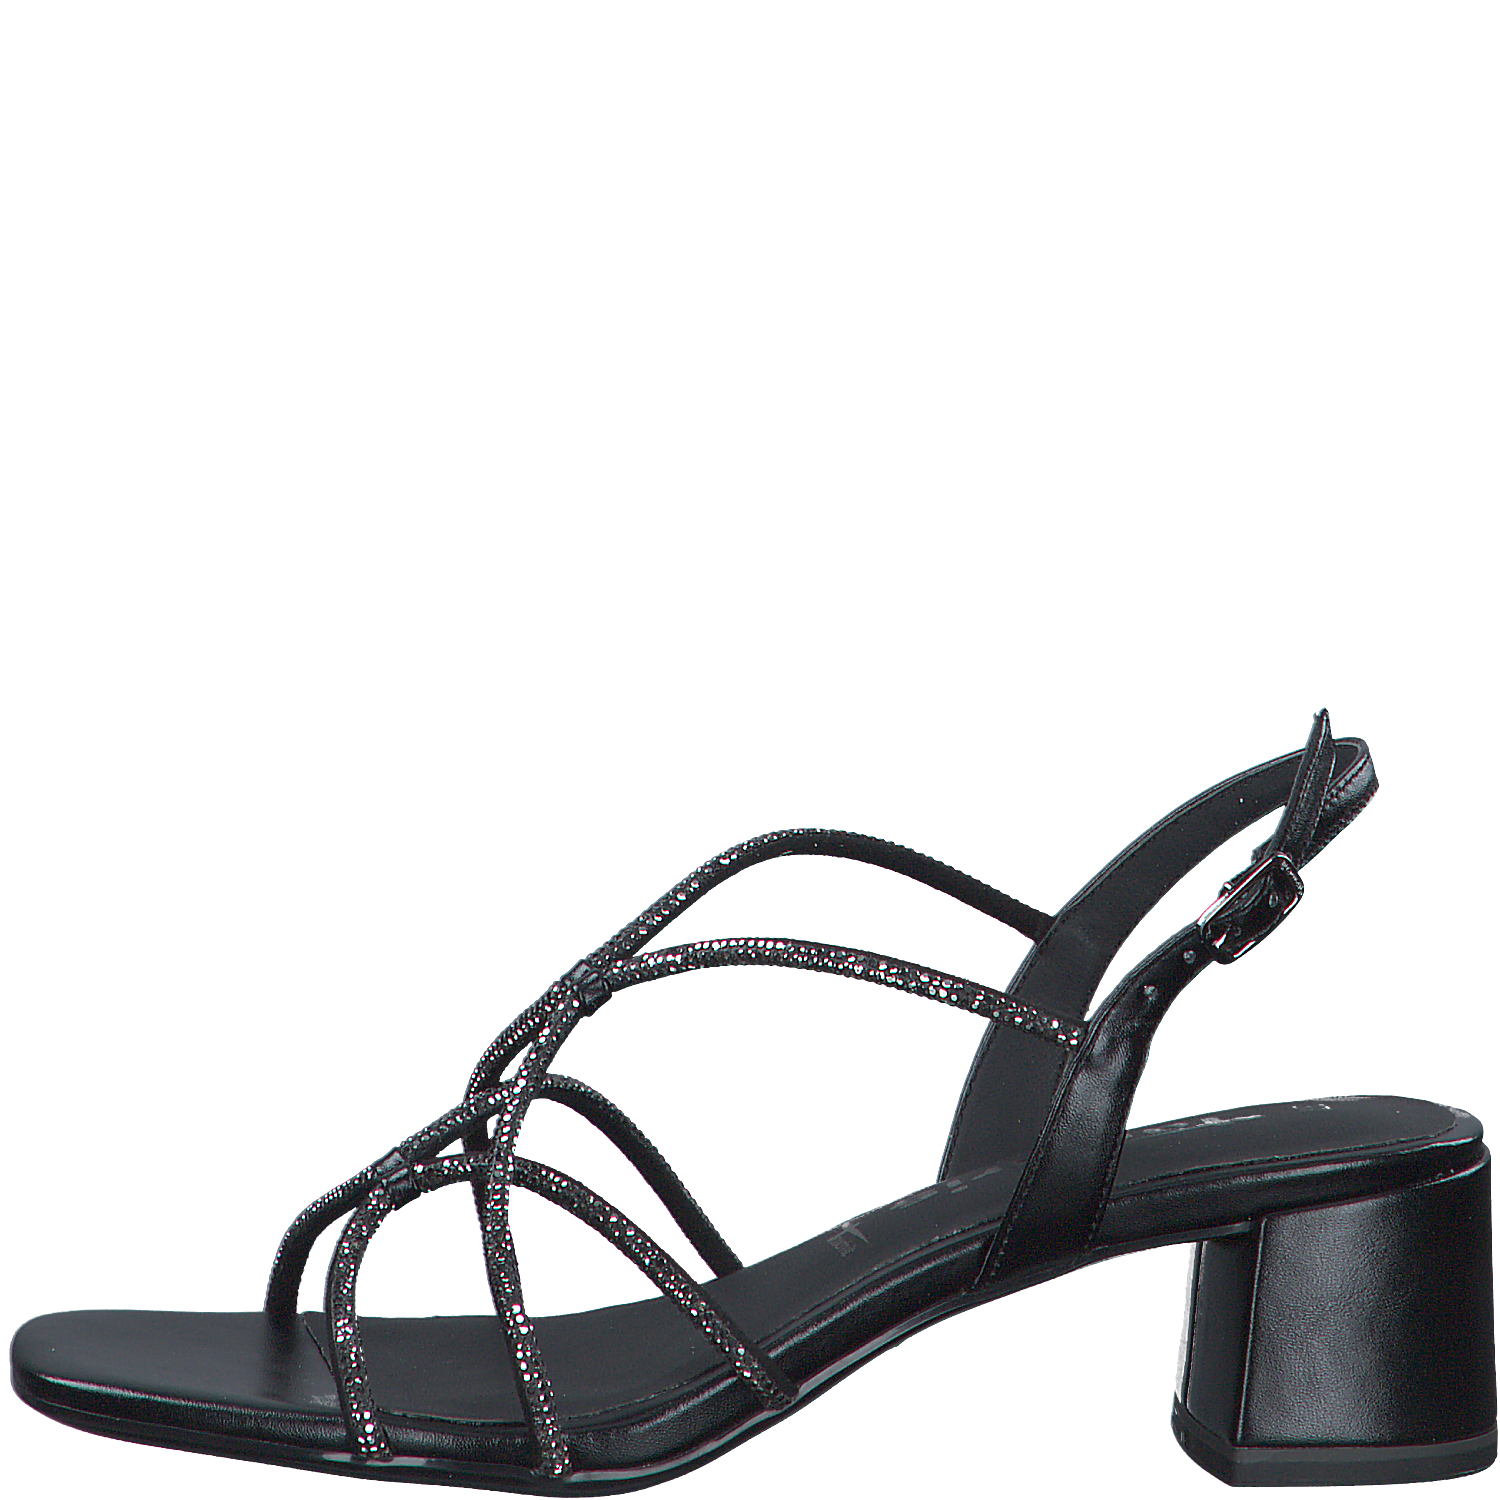 Tamaris 1-1-28236-20 black diamonte heels